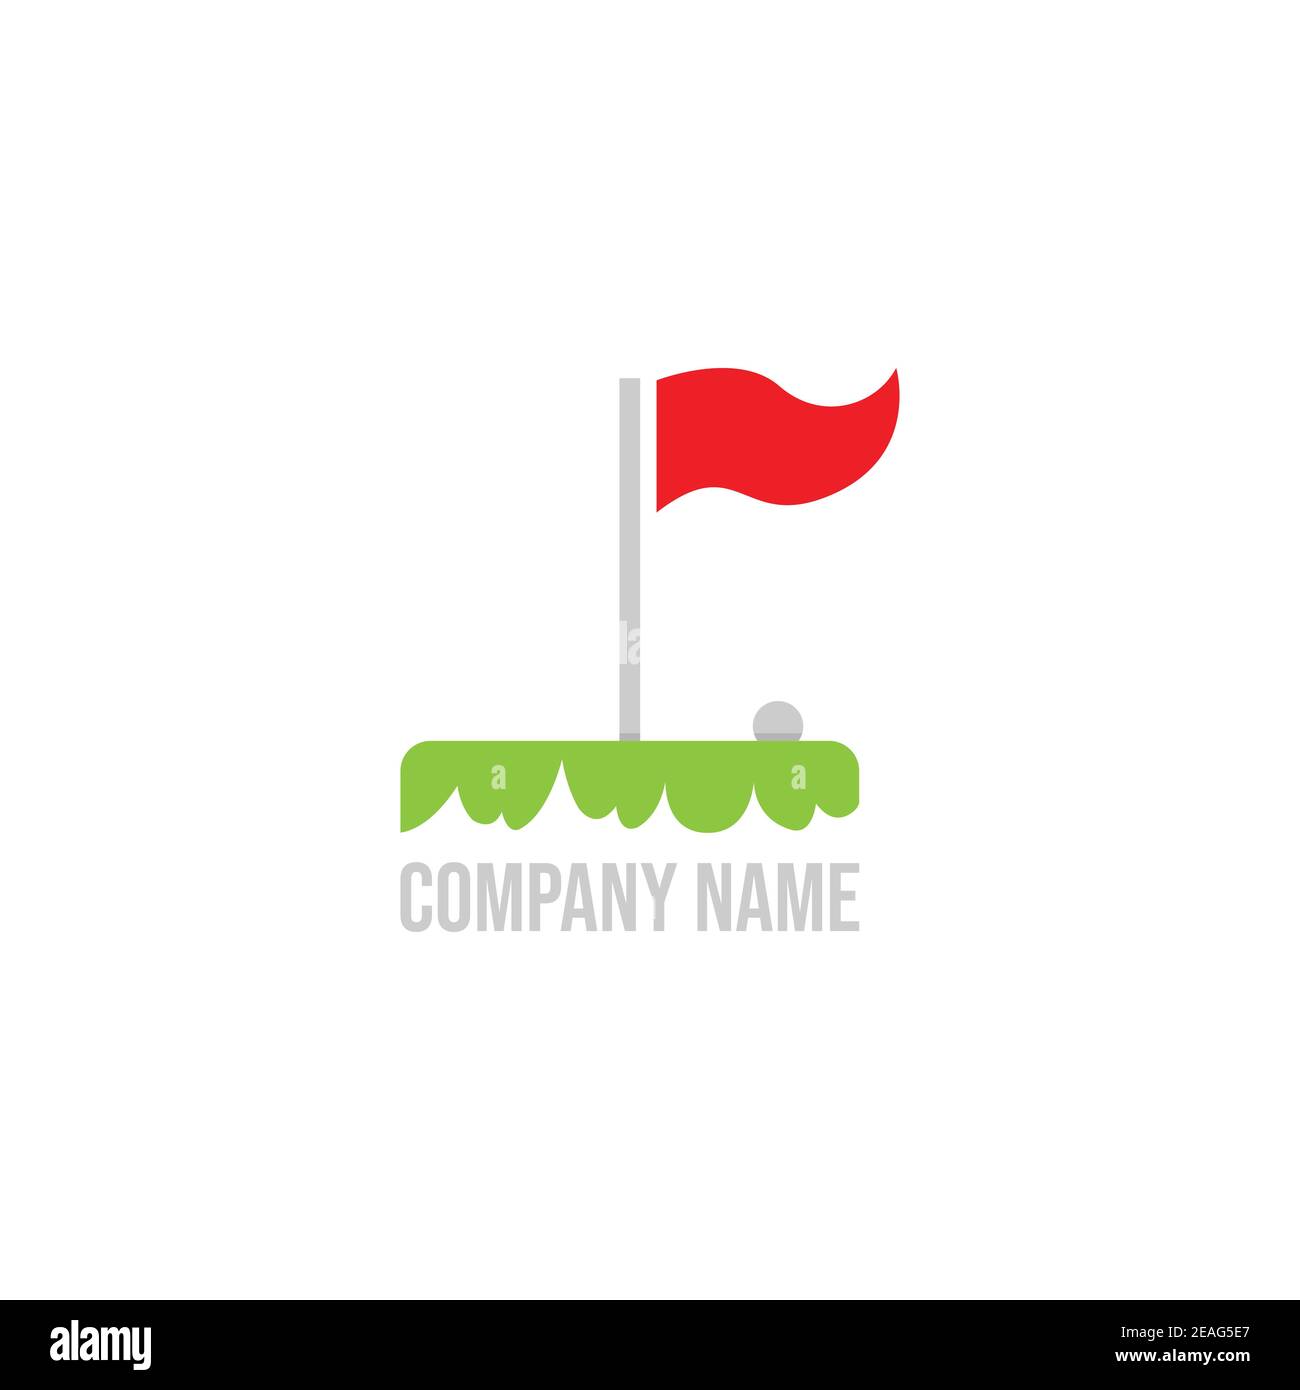 Golf sport course field community logo design vector image. Golf club icon symbol element and logo vector image Stock Vector